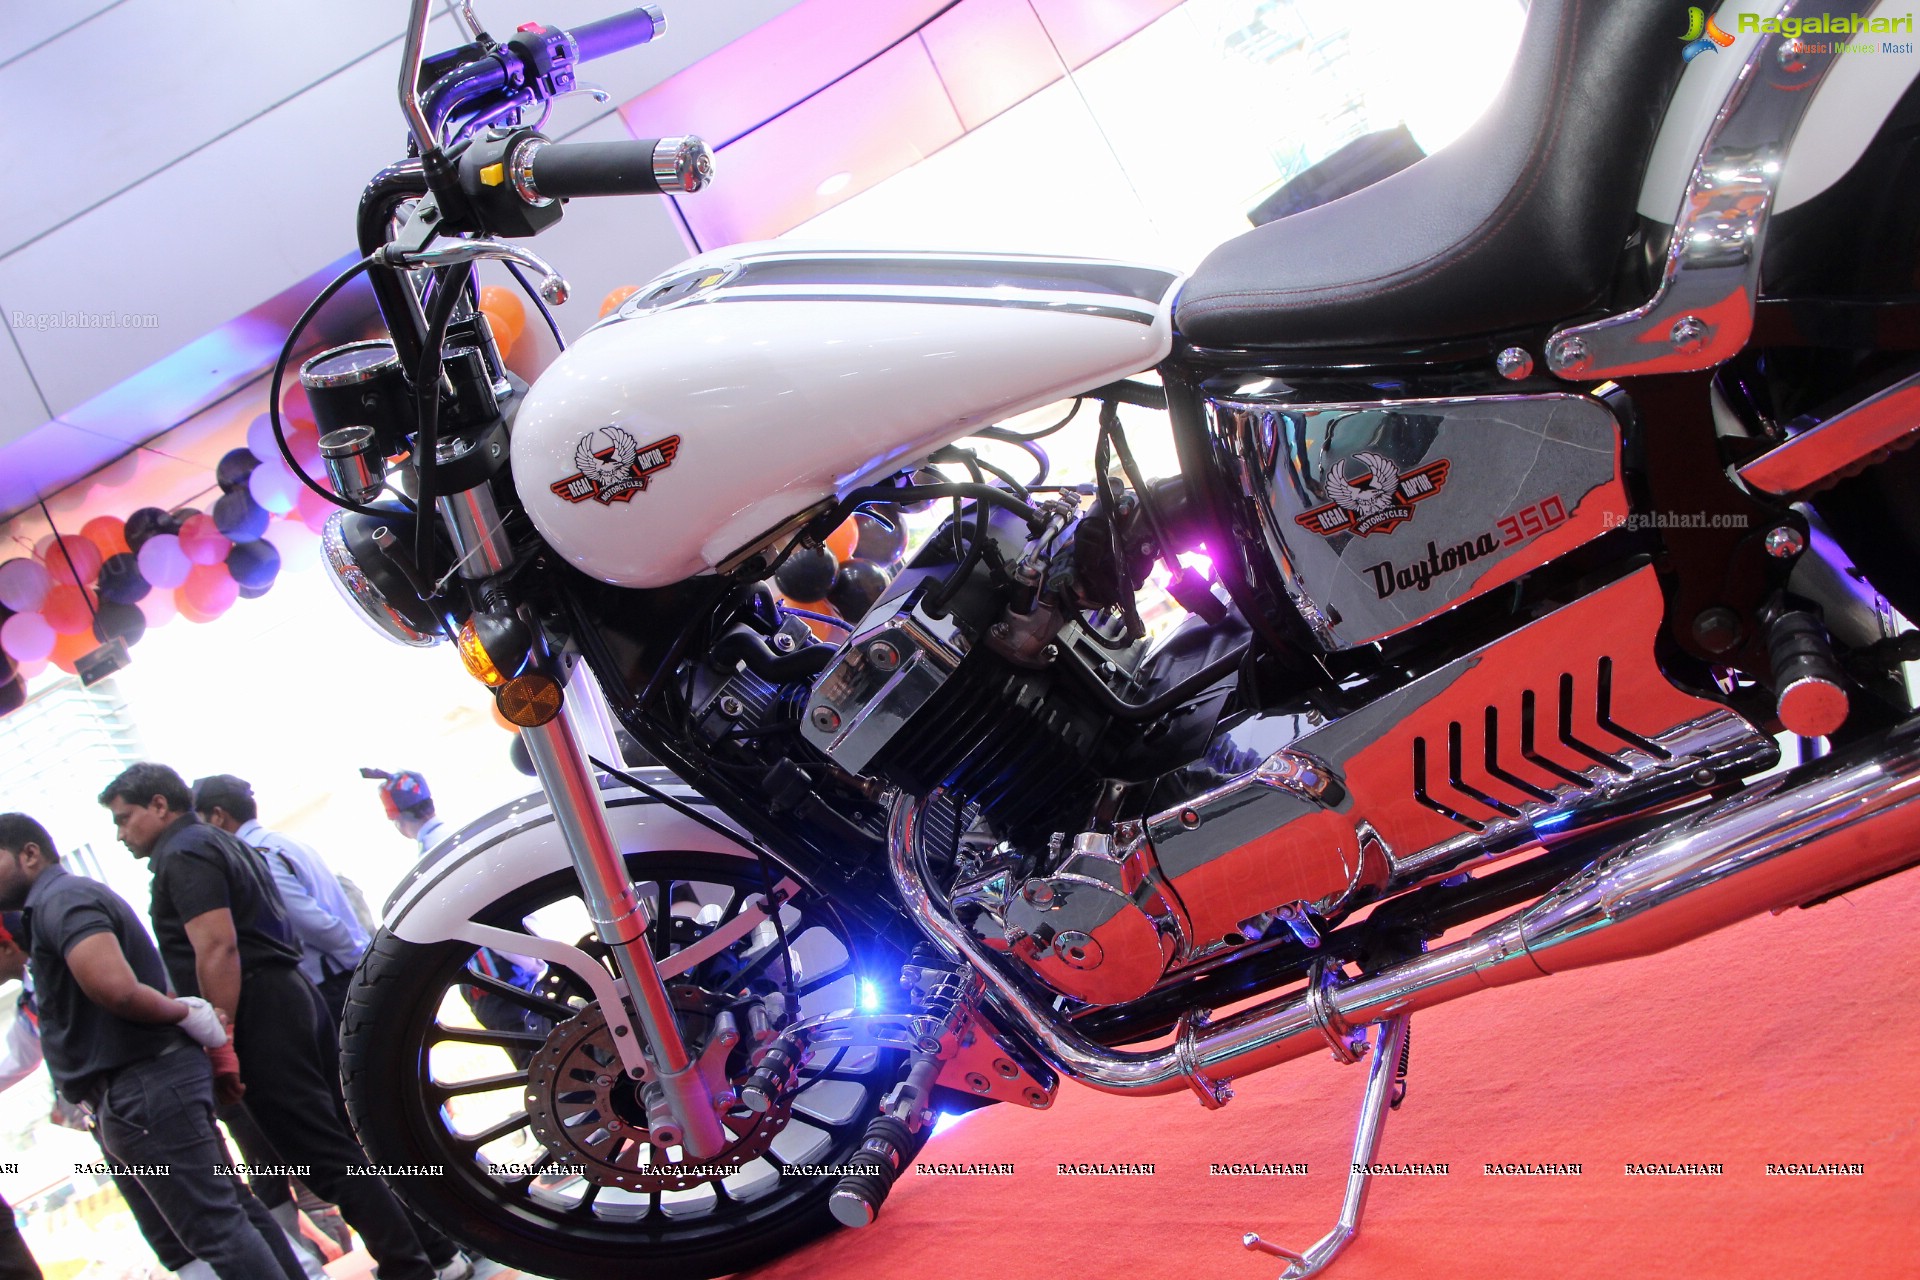 Regal Raptor Motor Cycles Showroom Launch in Hyderabad